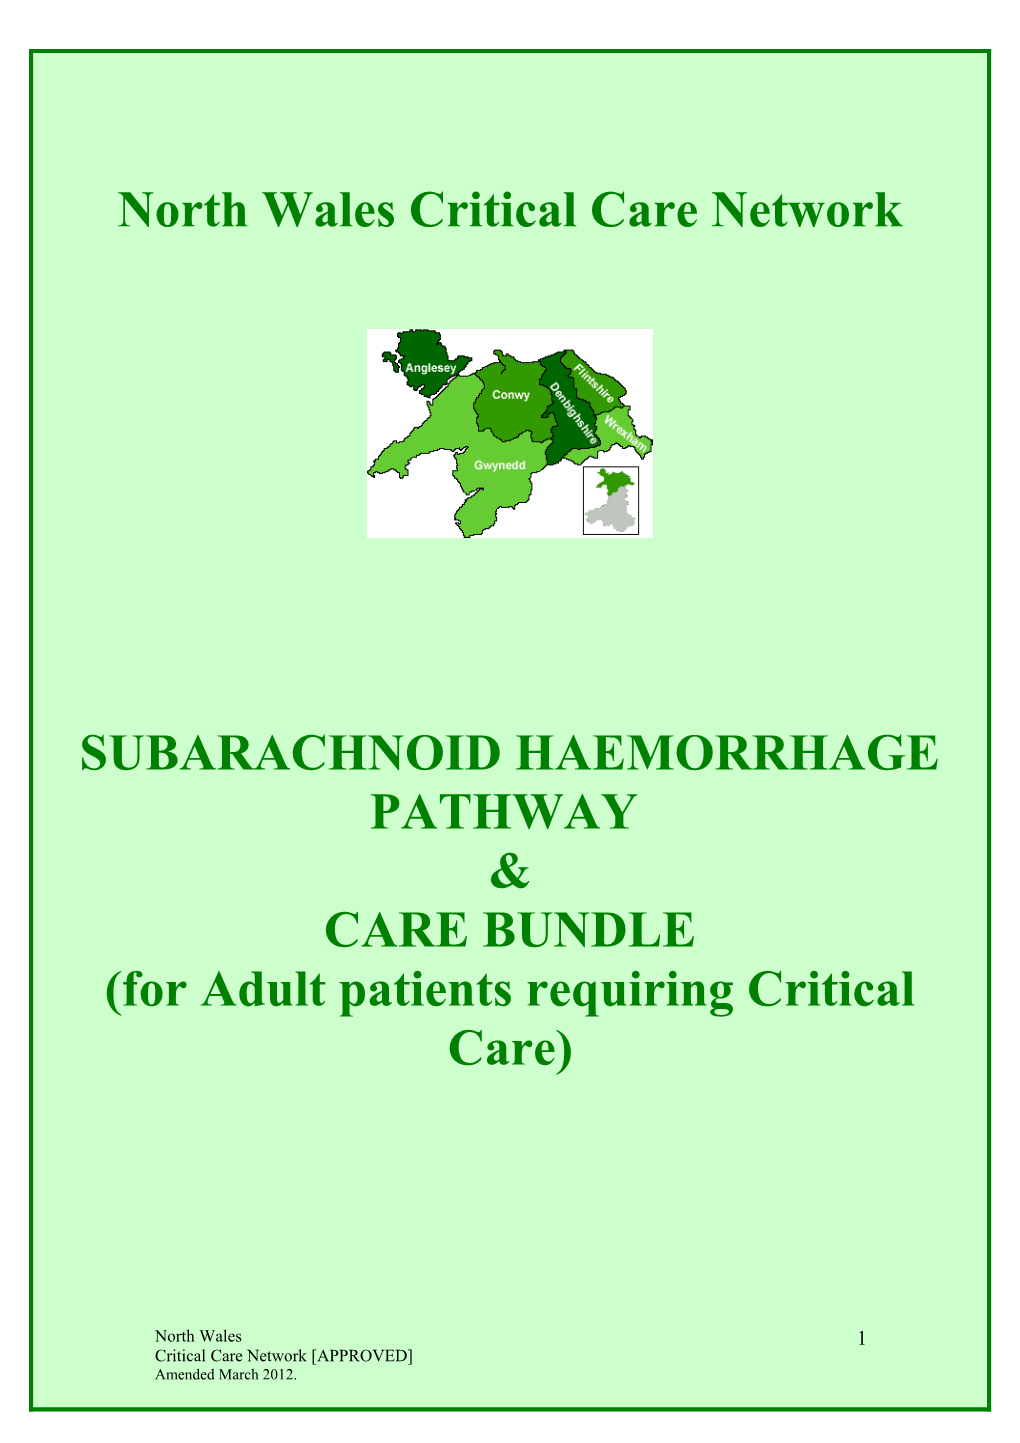 Adult Subarachnoid Haemorrhage Pathway and Care Bundle